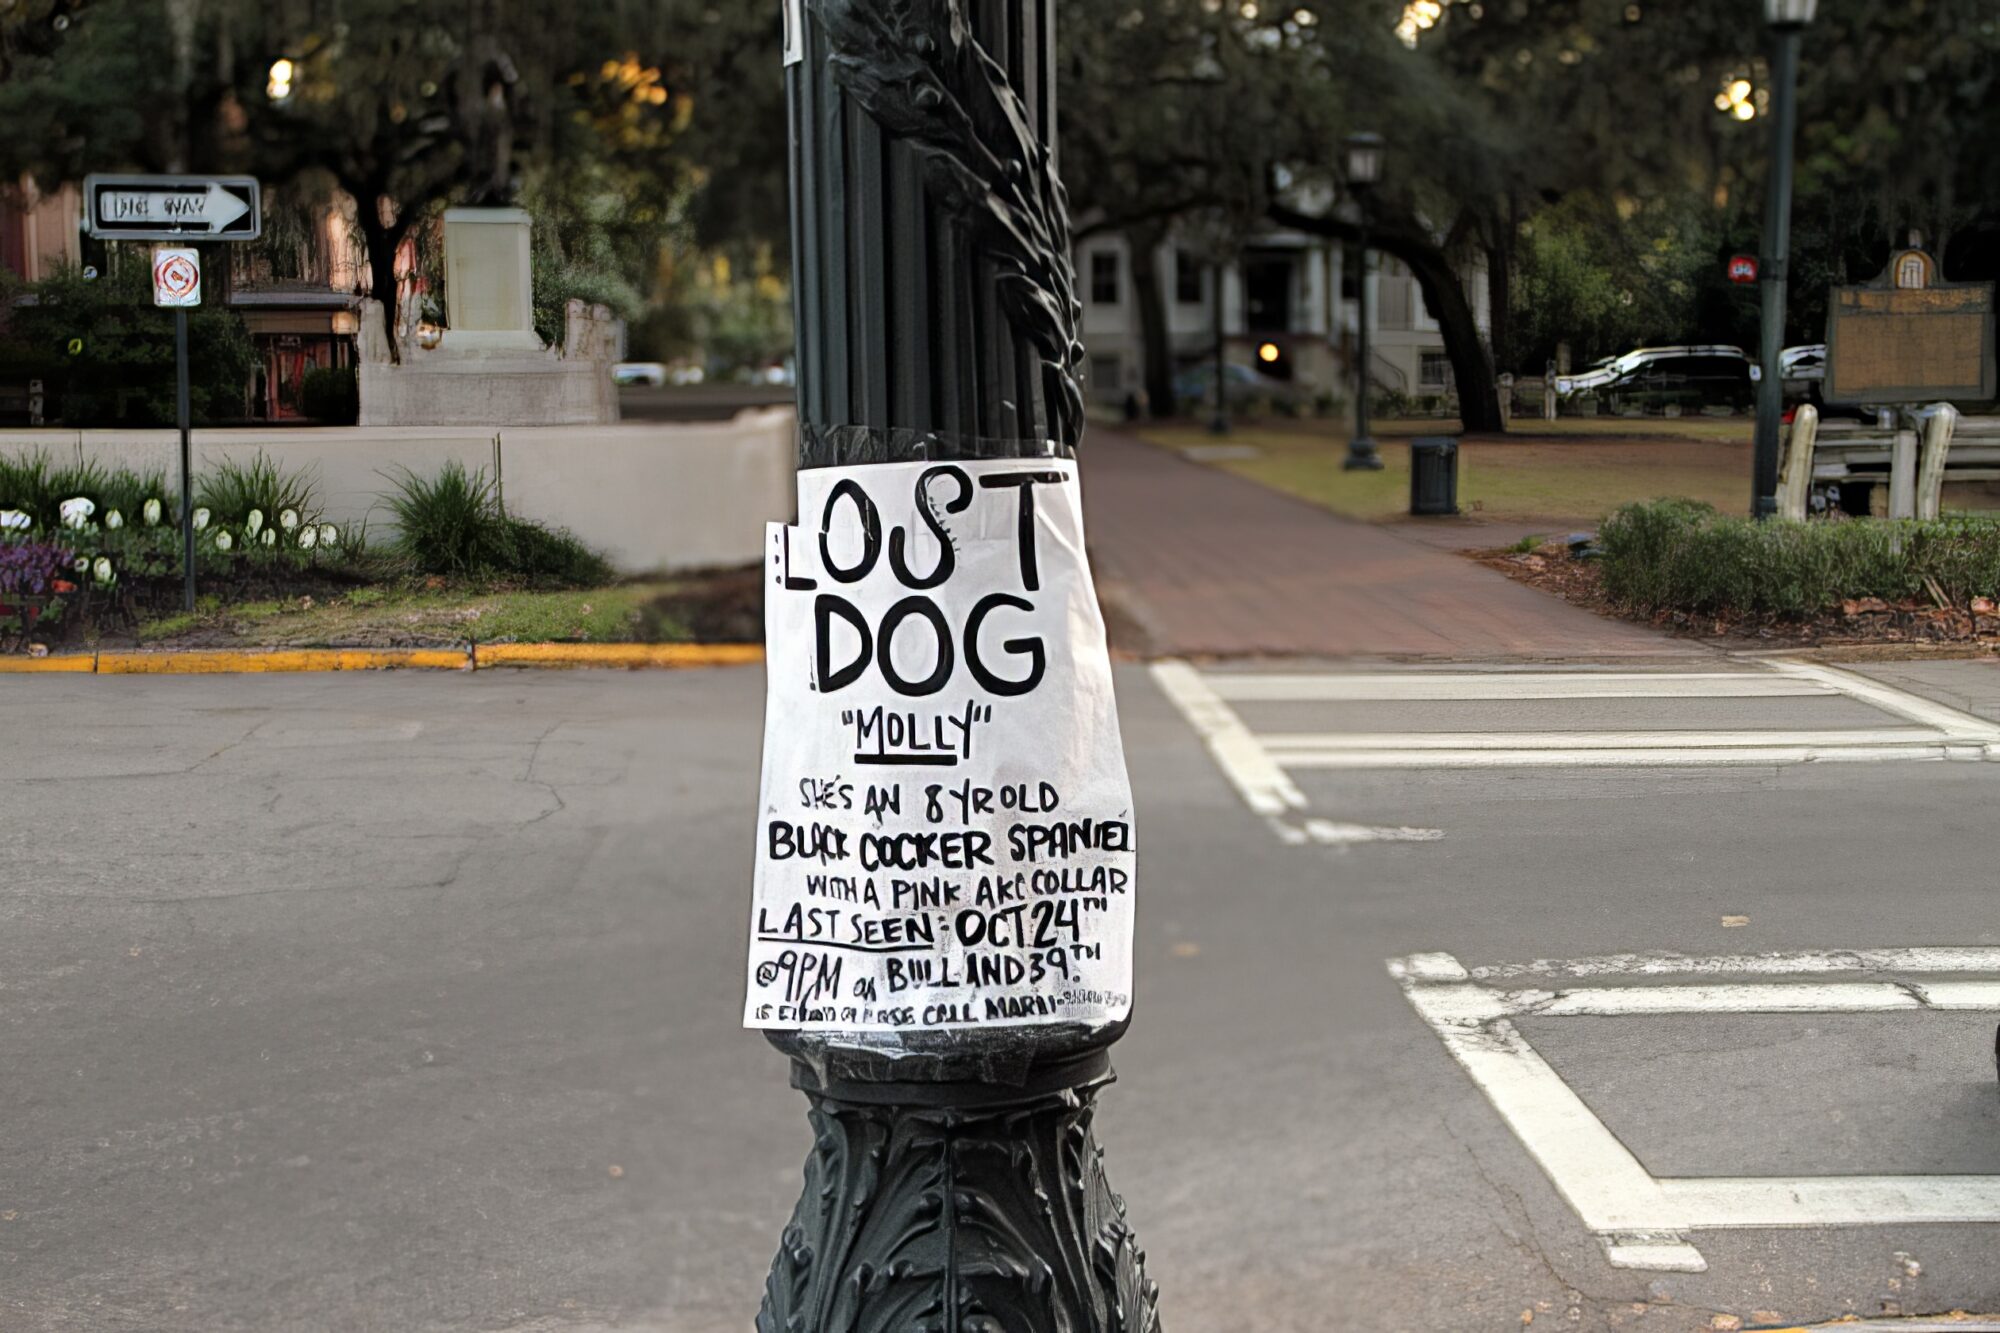 Lost Dog in Savannah